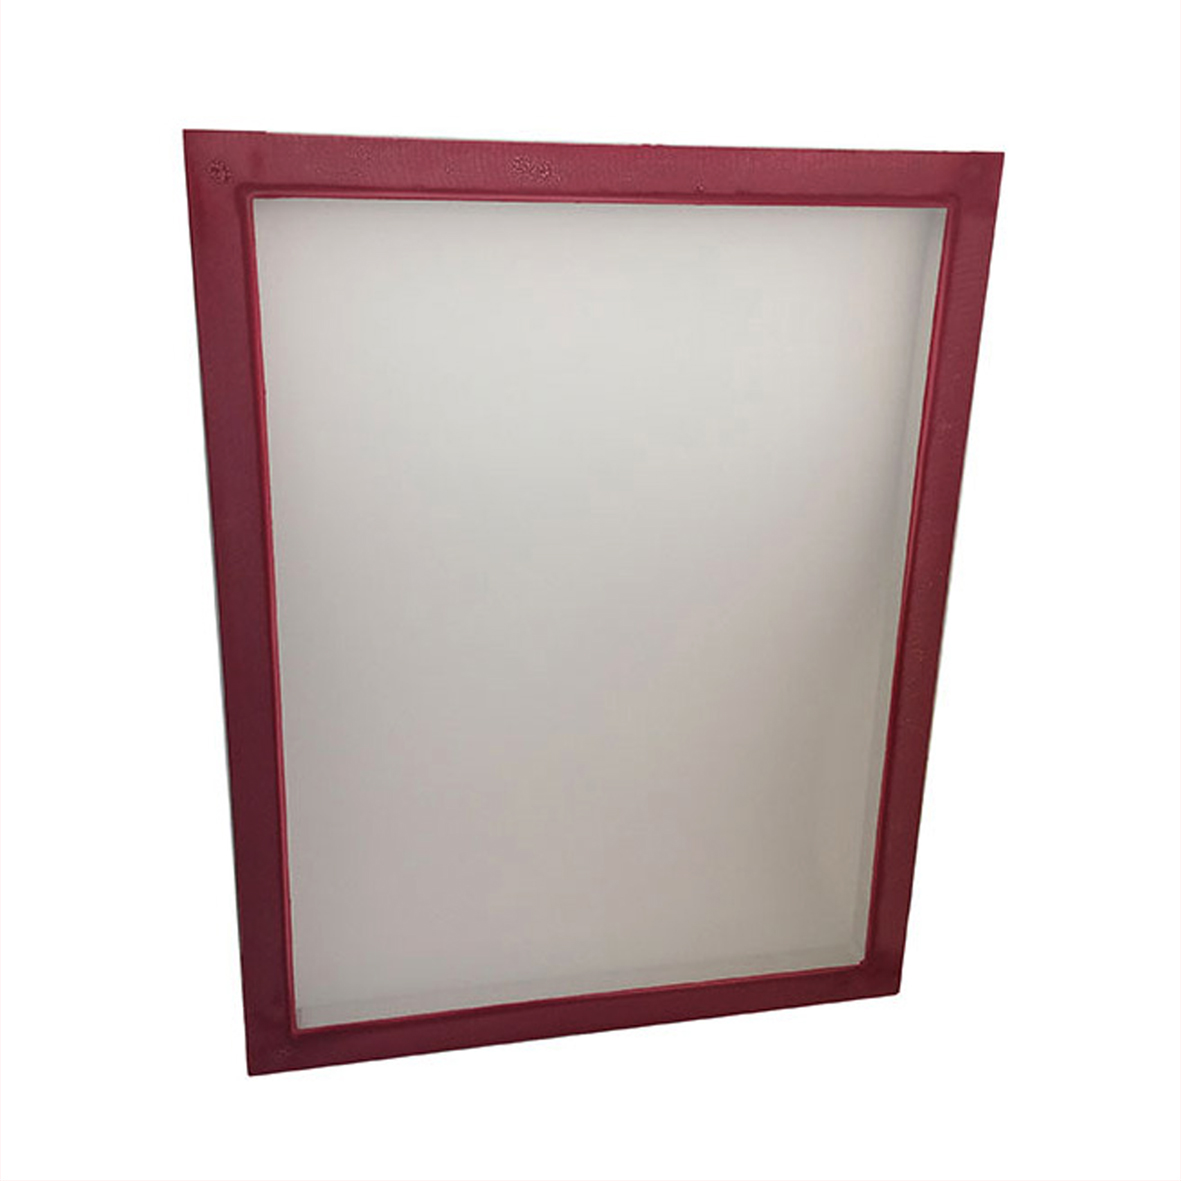 Red glue aluminum screen printing frame